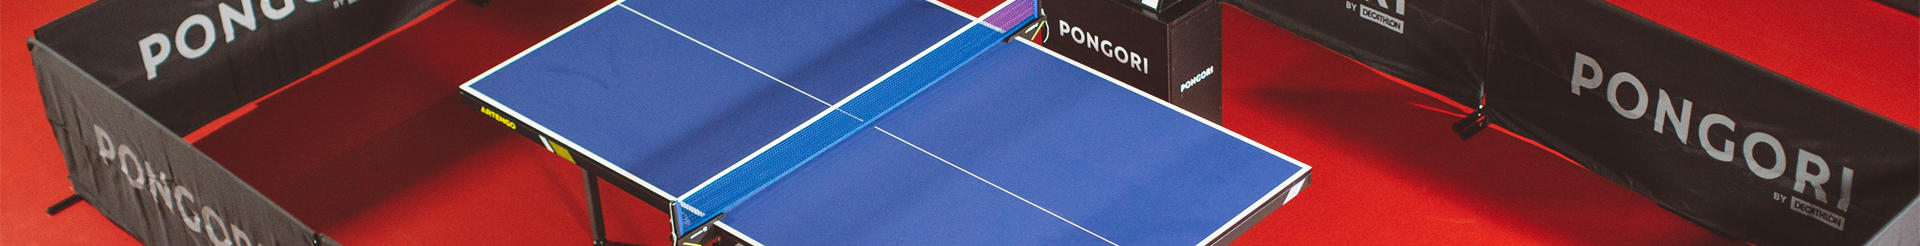 decathlon table tennis board